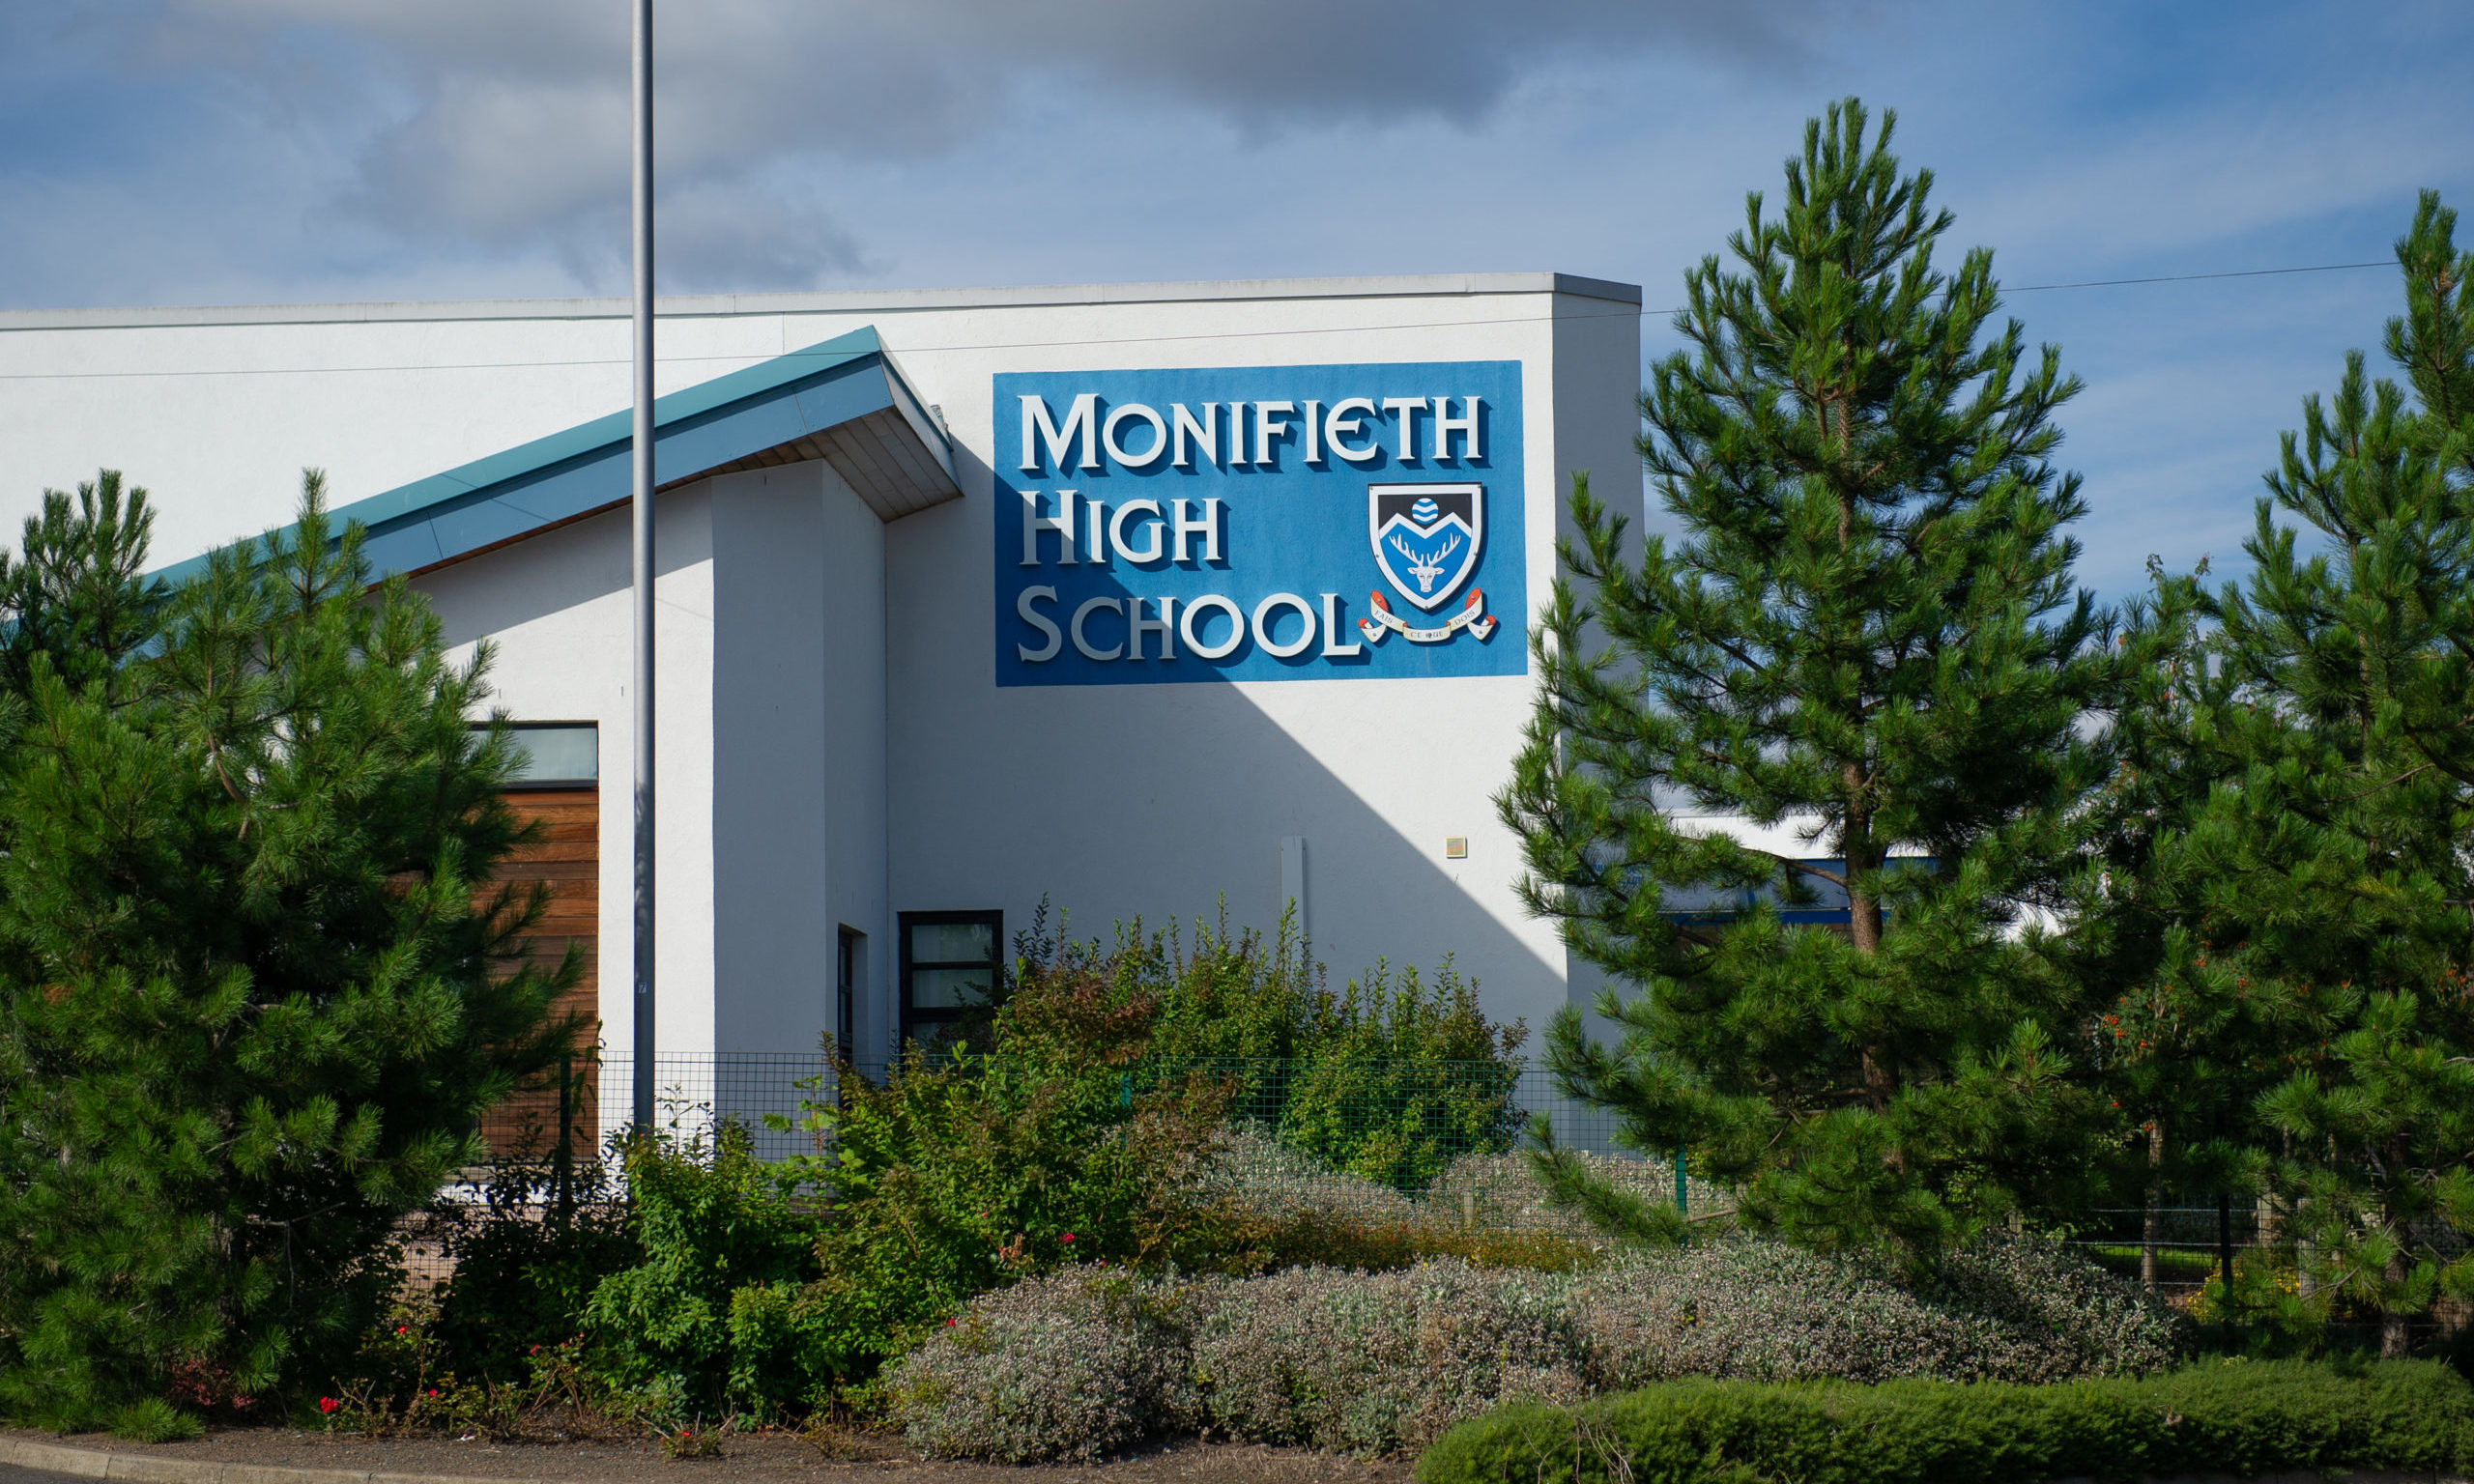 Monifieth High School.